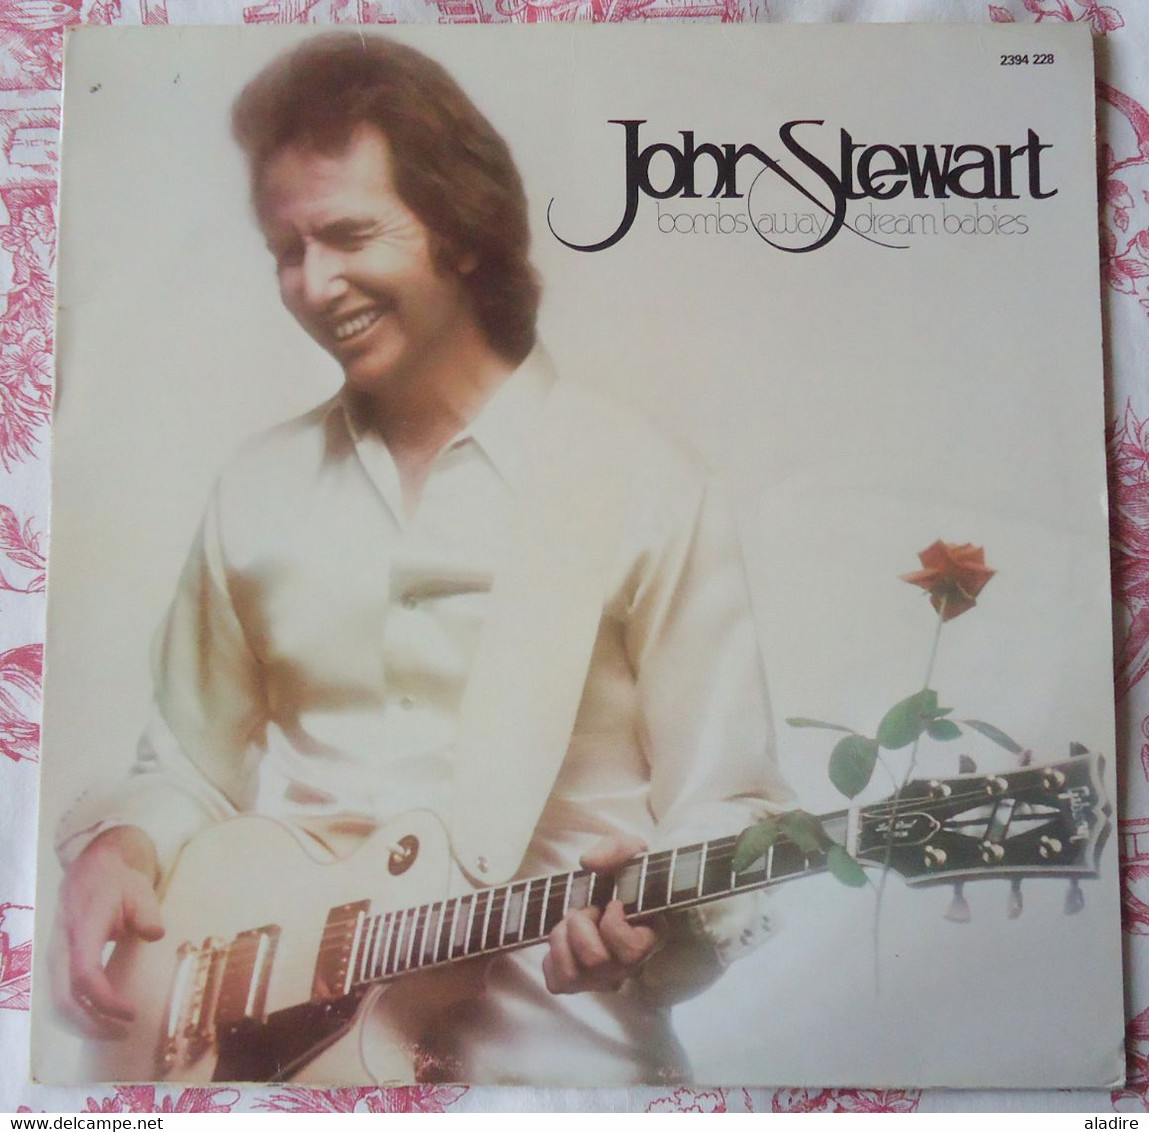 JOHN STEWART - Bombs Away Dream Babies - Warner Bros Records, 1979 - Country & Folk